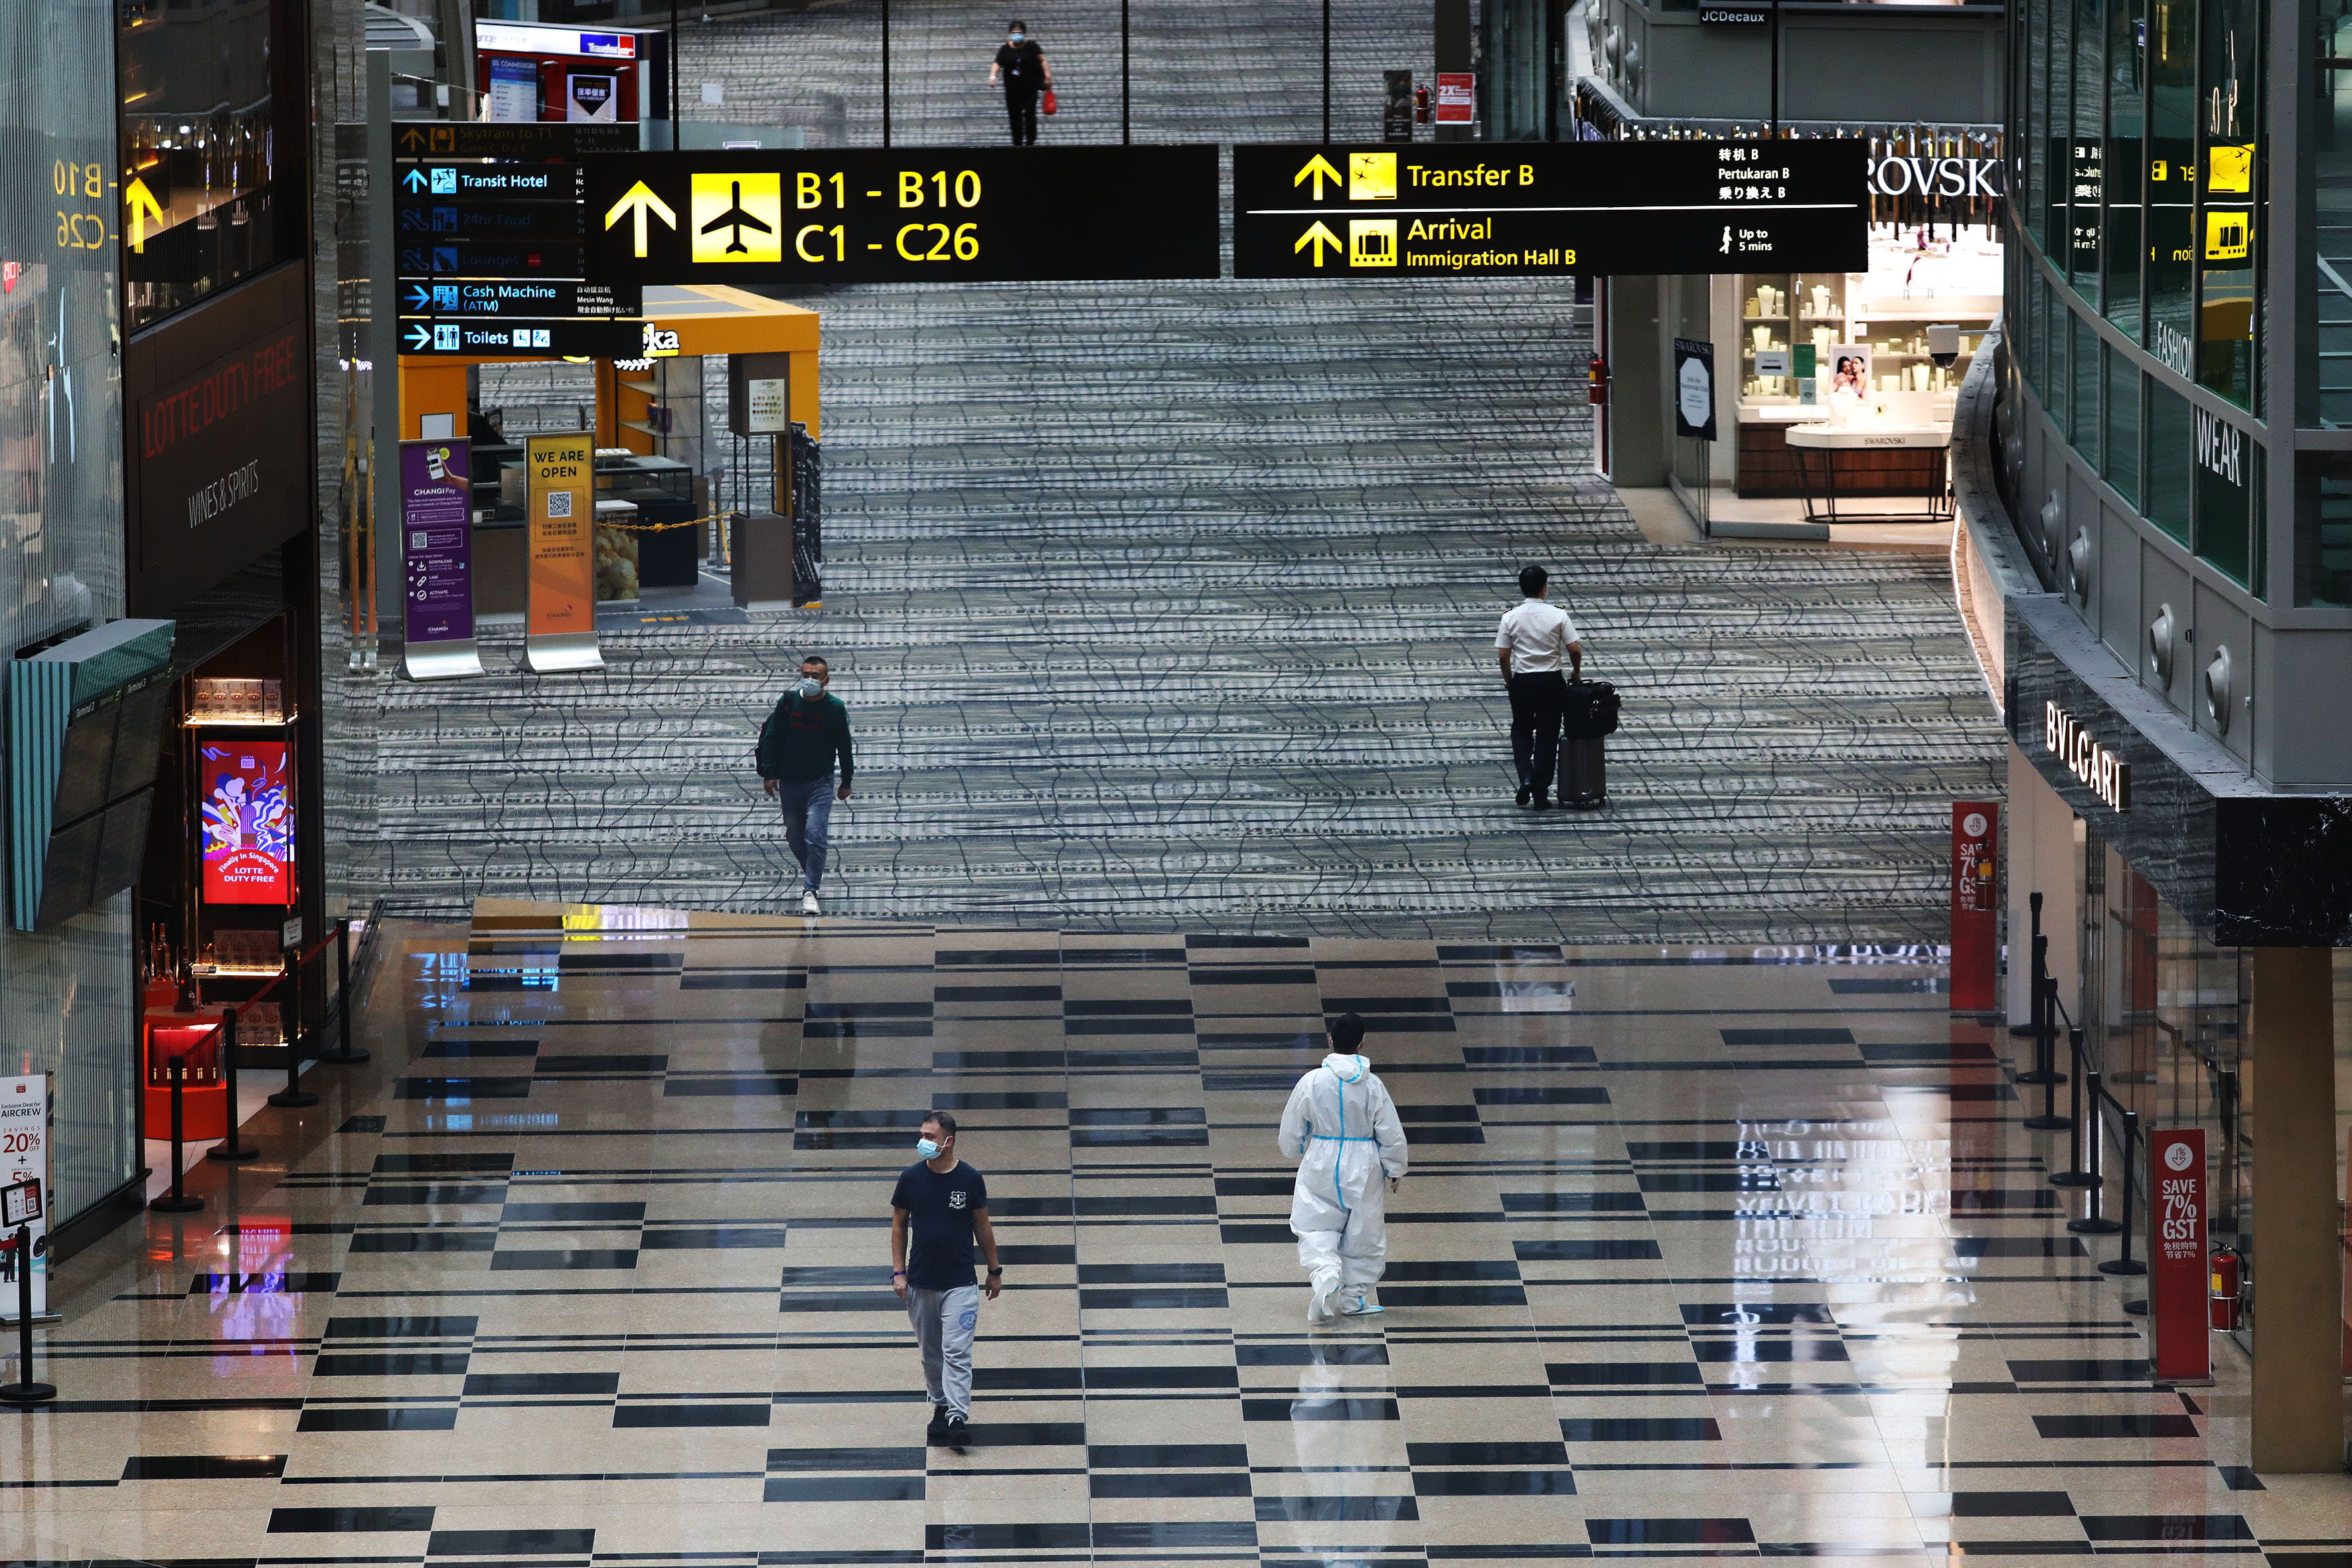 Generics of travellers at Changi Airport Terminal 3, Oct 19.